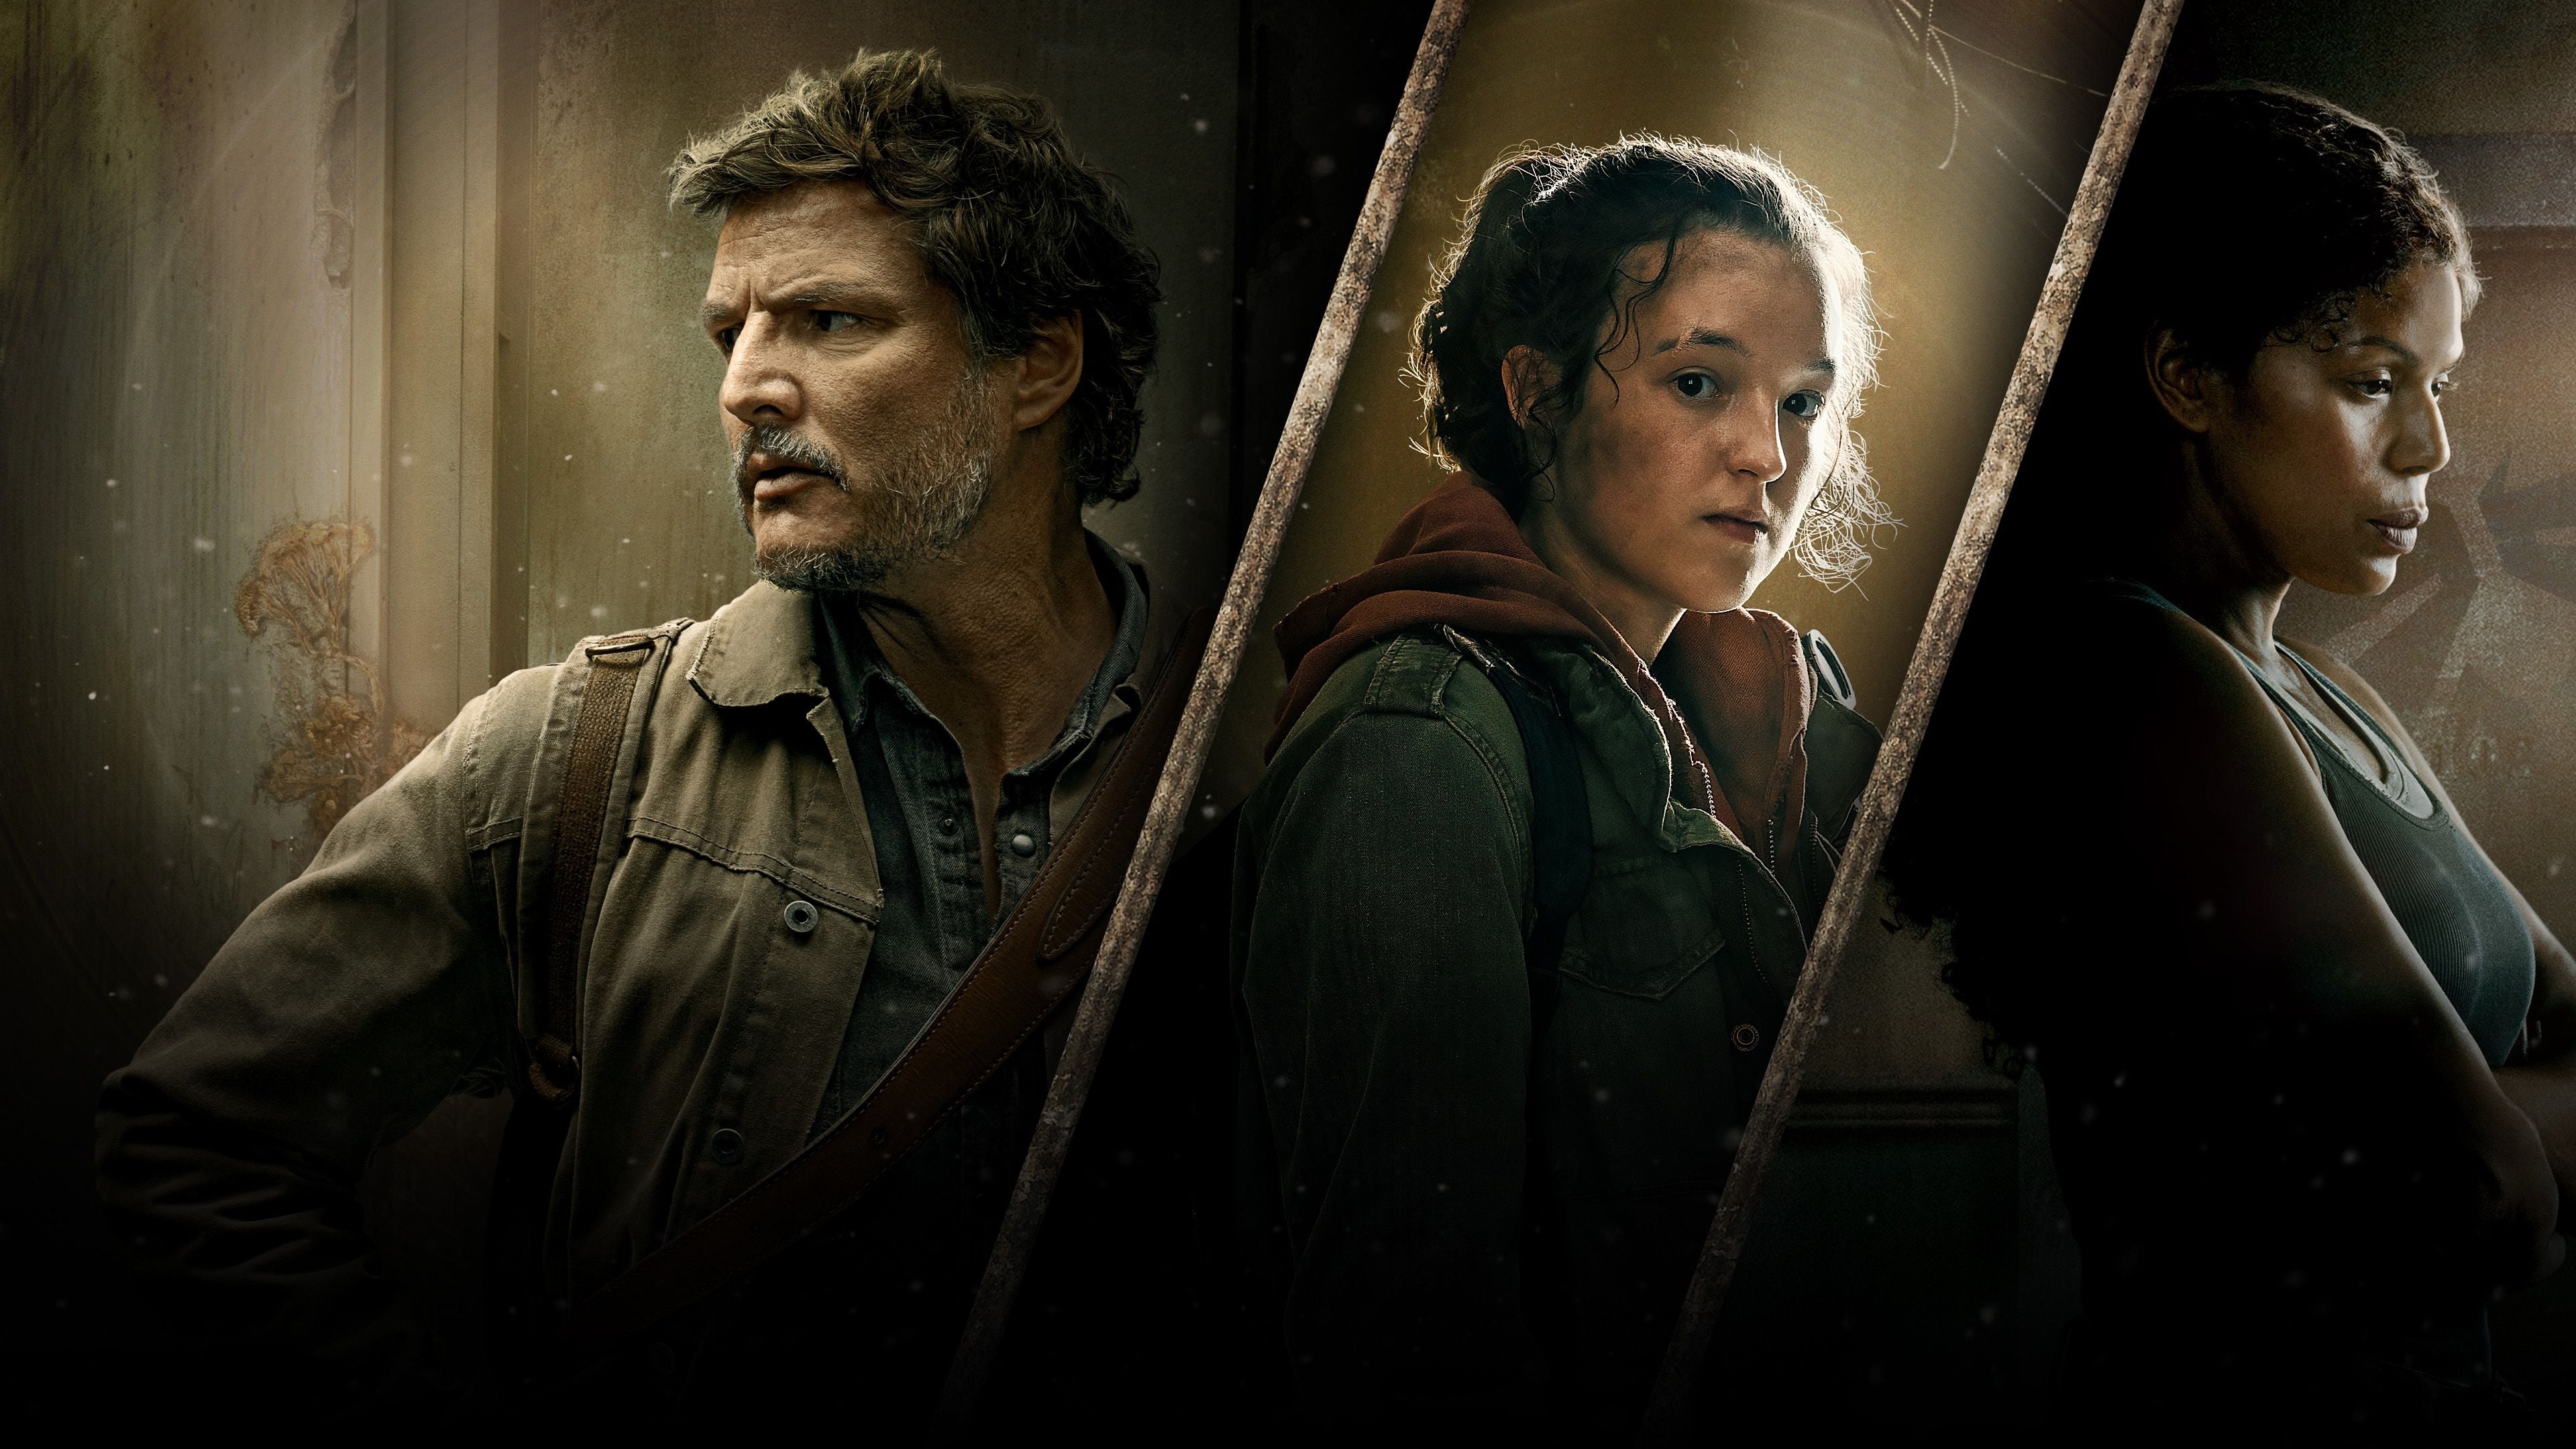 The Last of Us (TV Series 2023- ) - Backdrops — The Movie Database (TMDB)